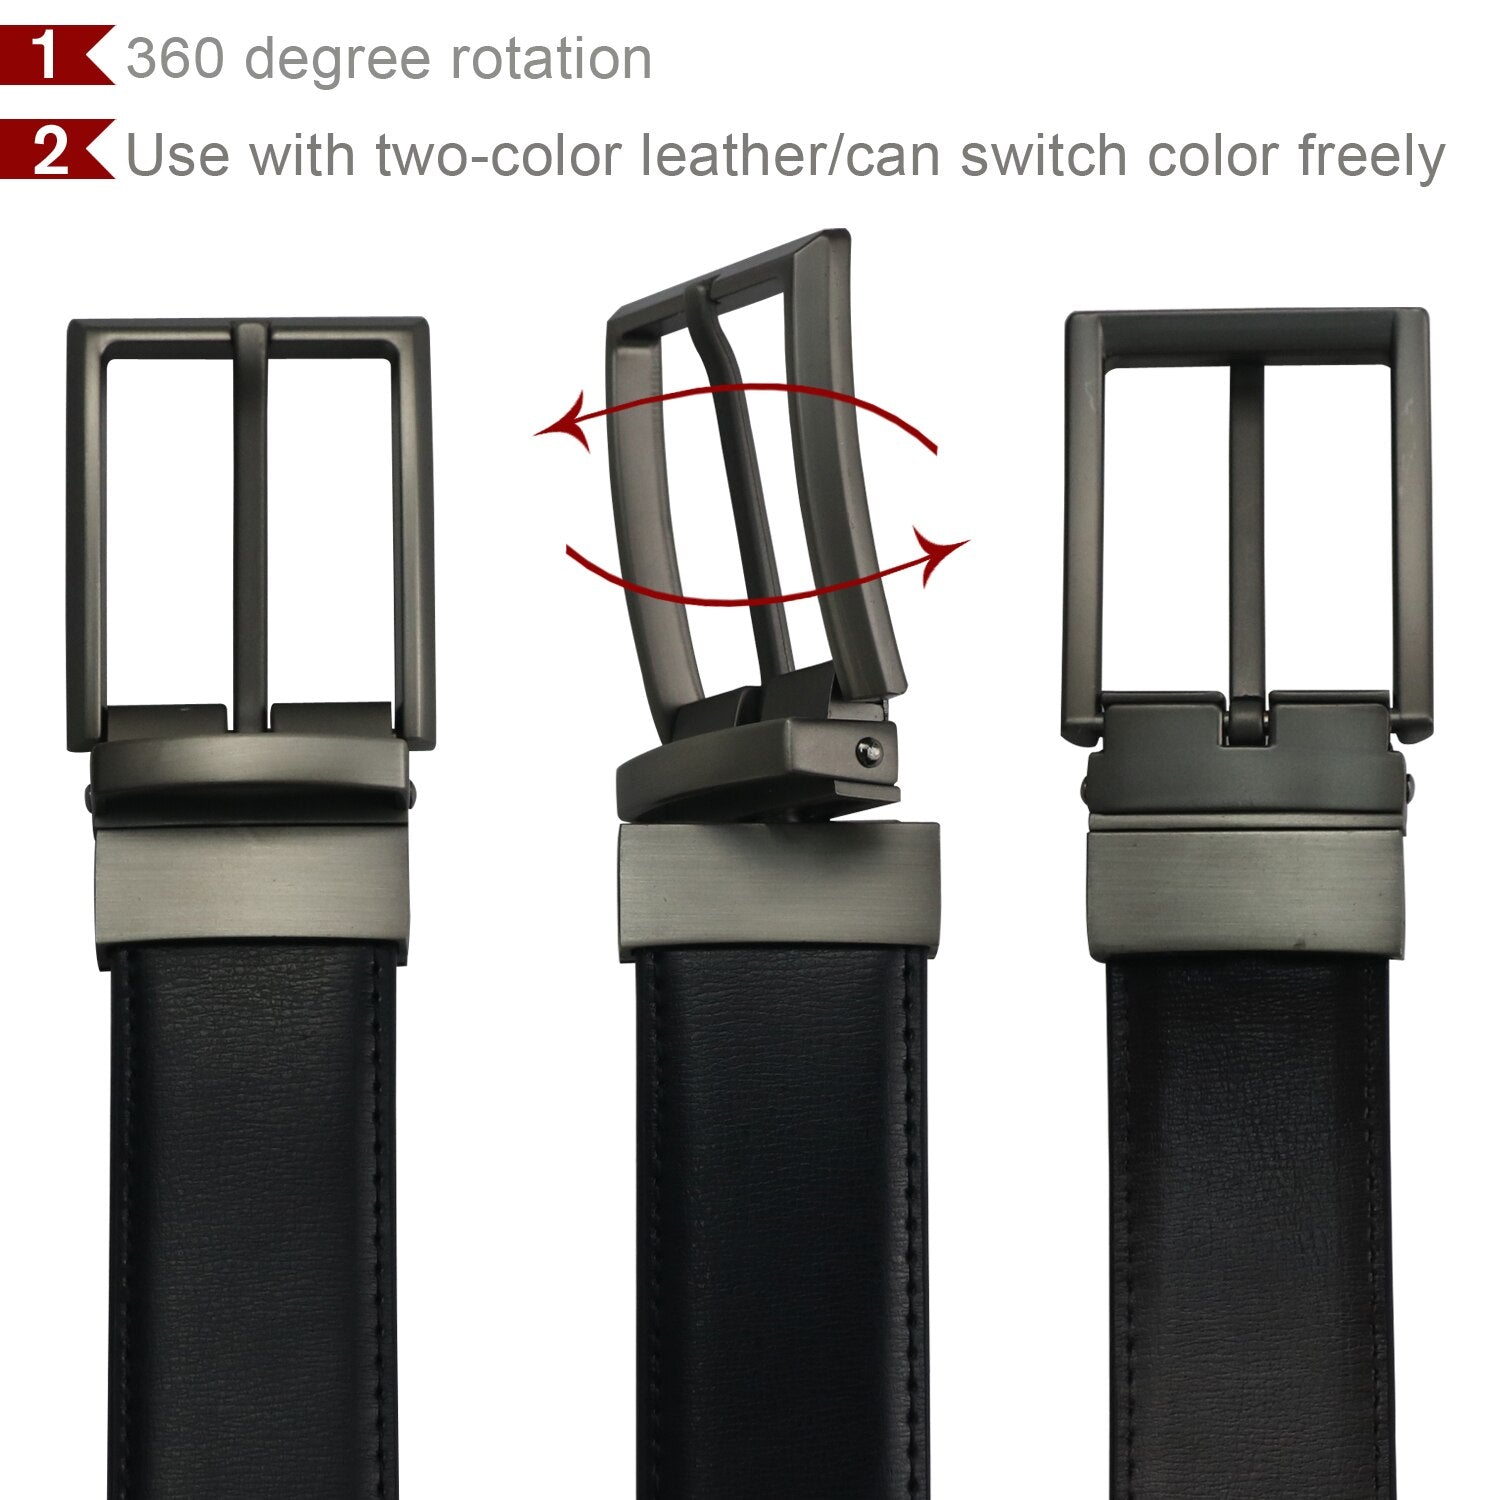 Maikun Belt Men&#39;s Reversible Leather Dress Belt Metal Pin Rotated Buckle Fashion Luxury Brand Male Belt High Quality Waistband - Bonnie Lassio